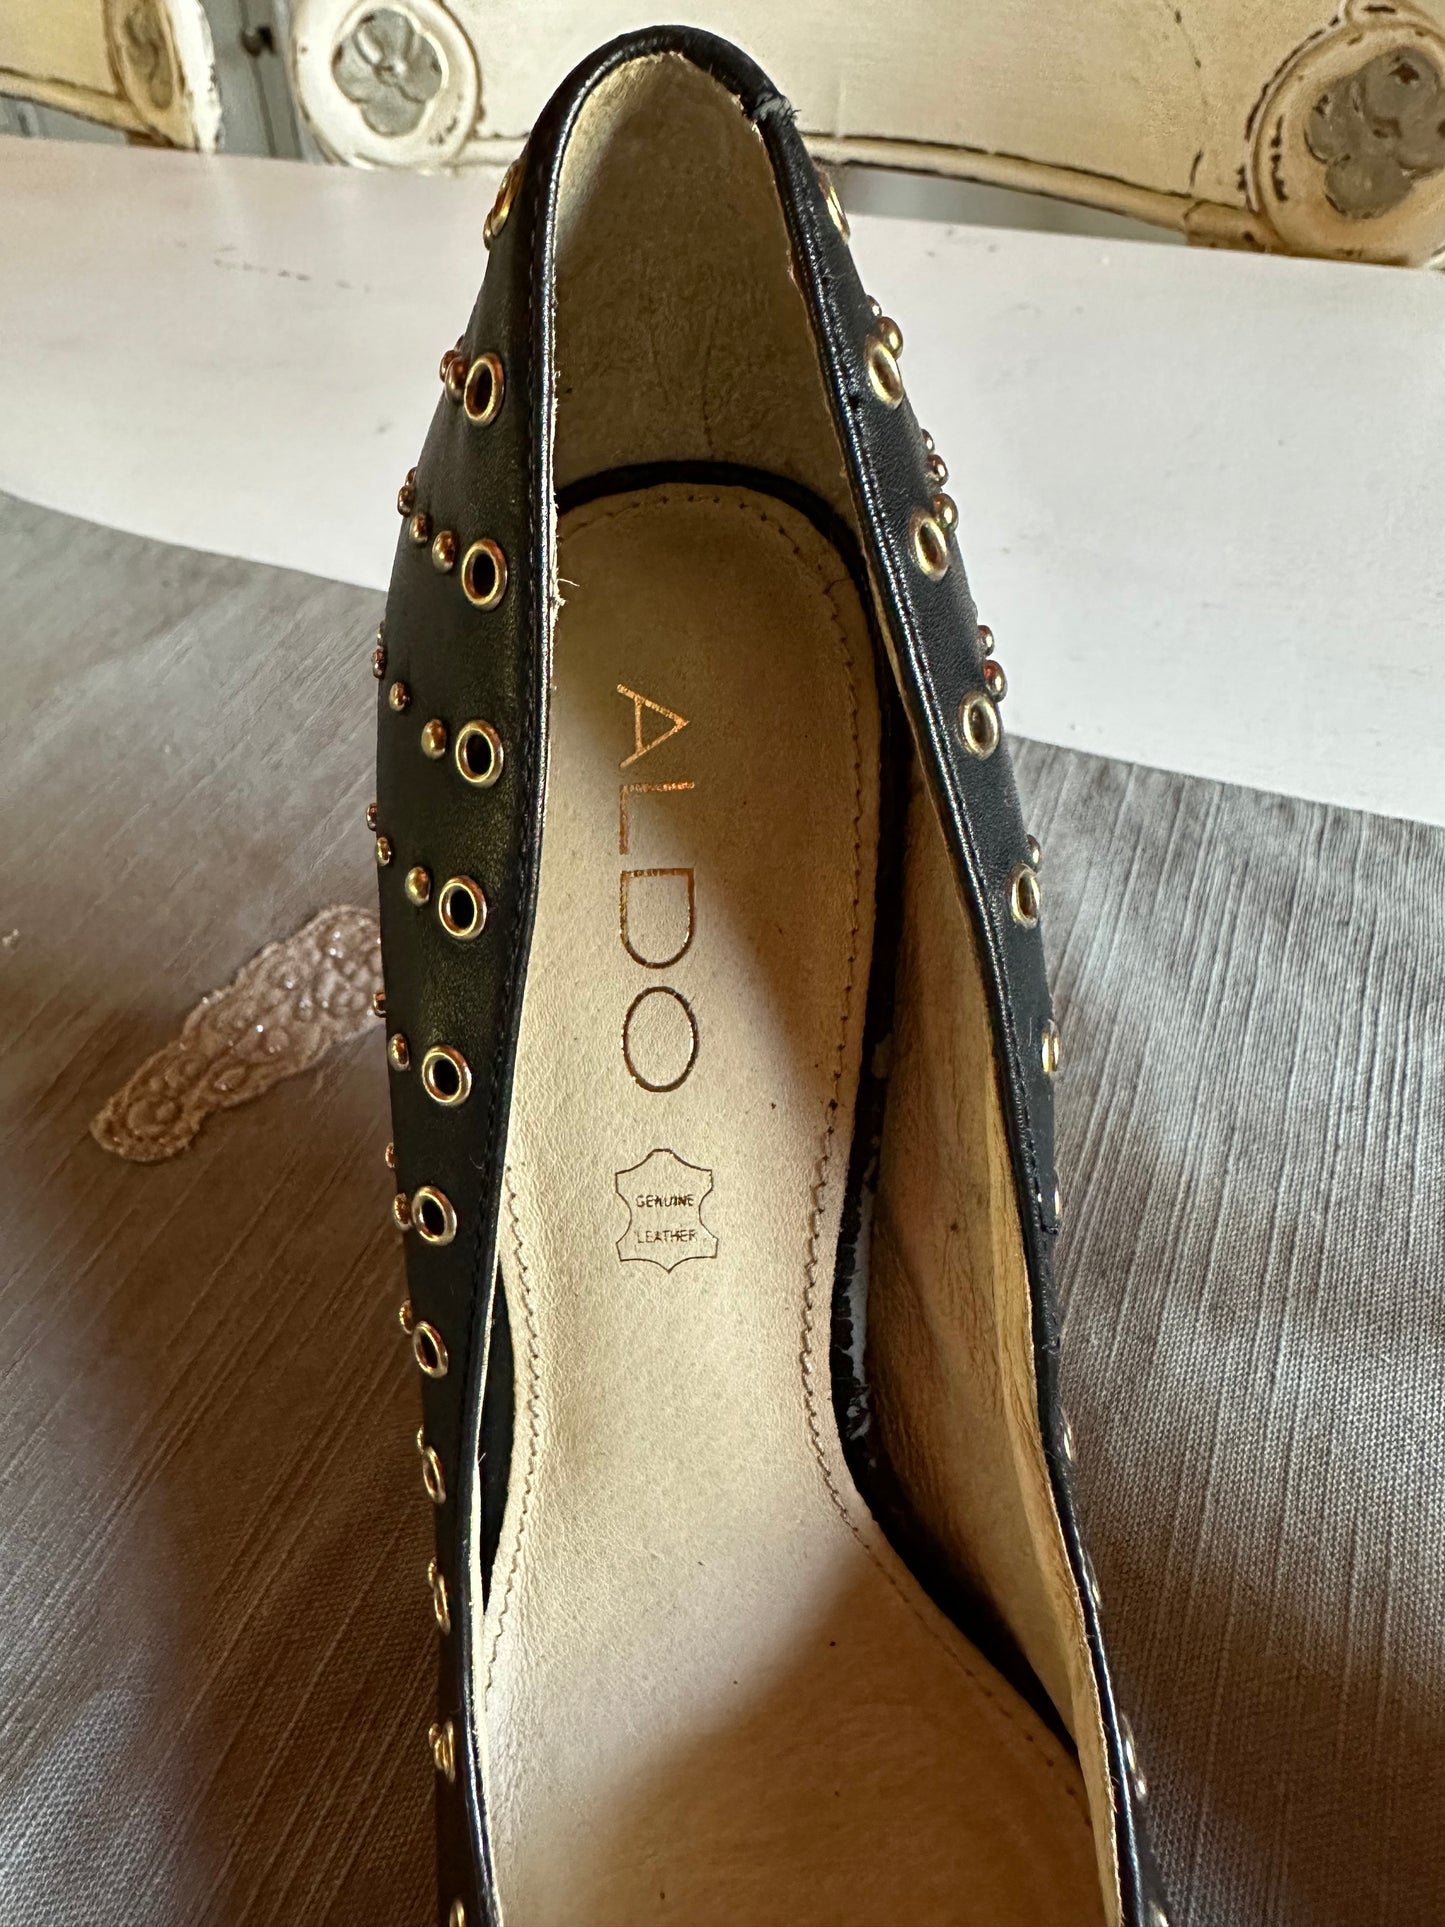 ALDO - Black Leather Stiletto Pumps w/ Gold Studs